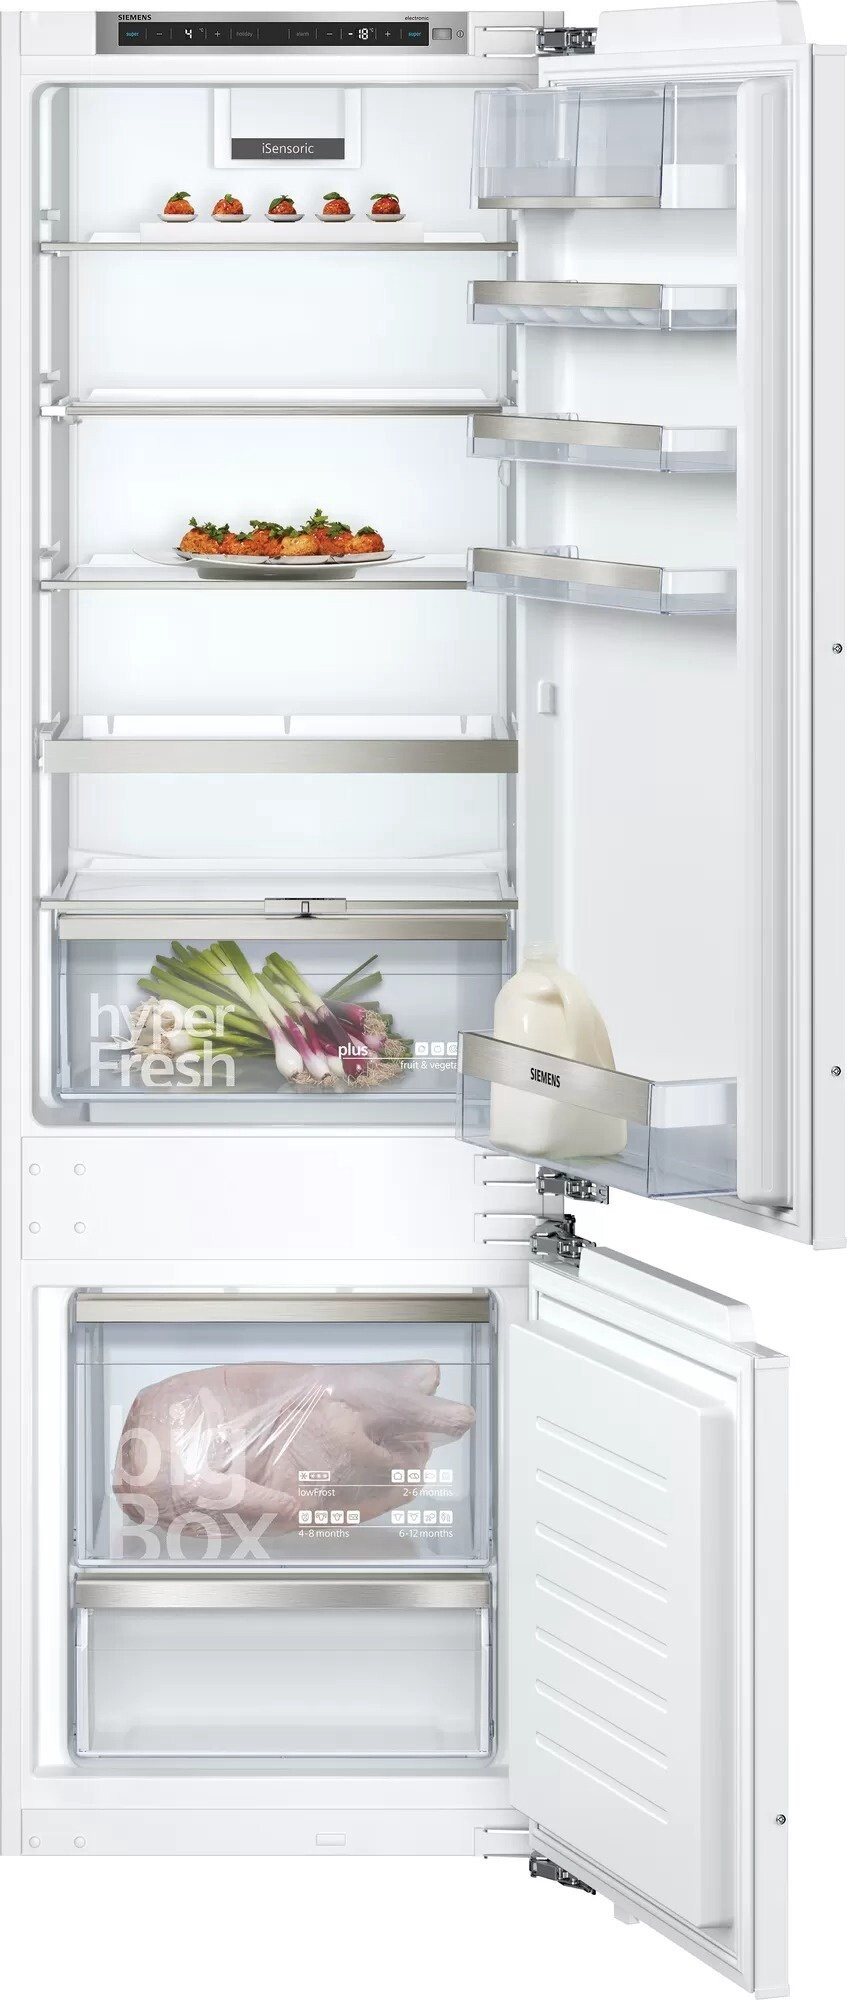 Встраиваемый холодильник Siemens KI87SADD0 белый pc mpi for siemens s7 300 400plc porgramming cable 6es7 972 0ca23 0xa0 rs232 to mpi adapter pc mpi